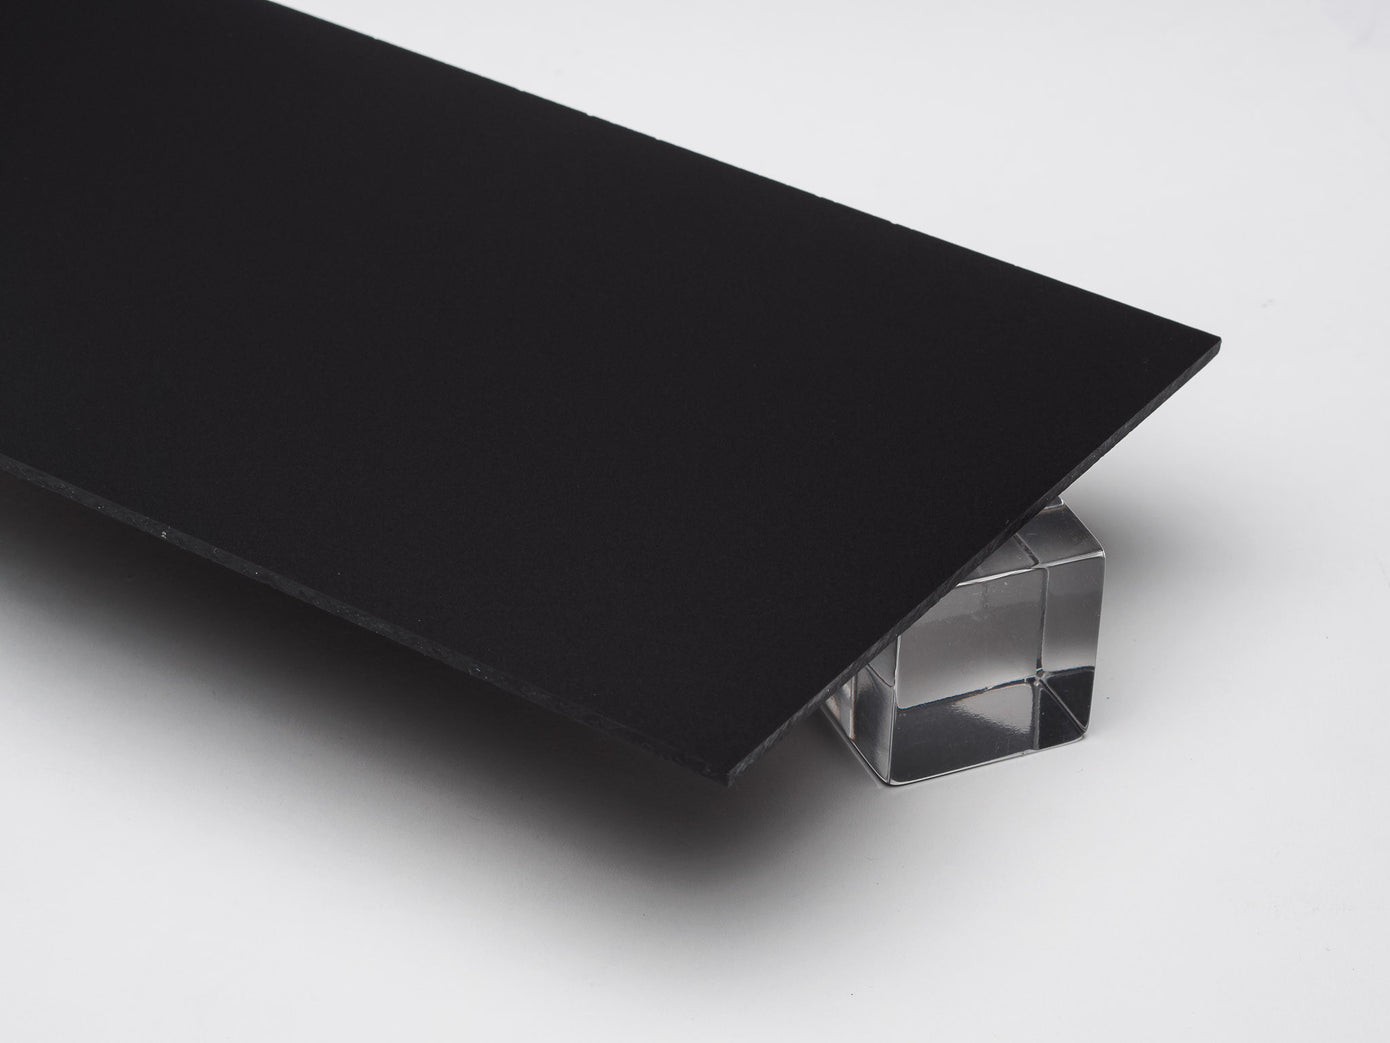 Black Plexiglass Mirror Sheets PMMA Thin Flexible Plastic Sheets